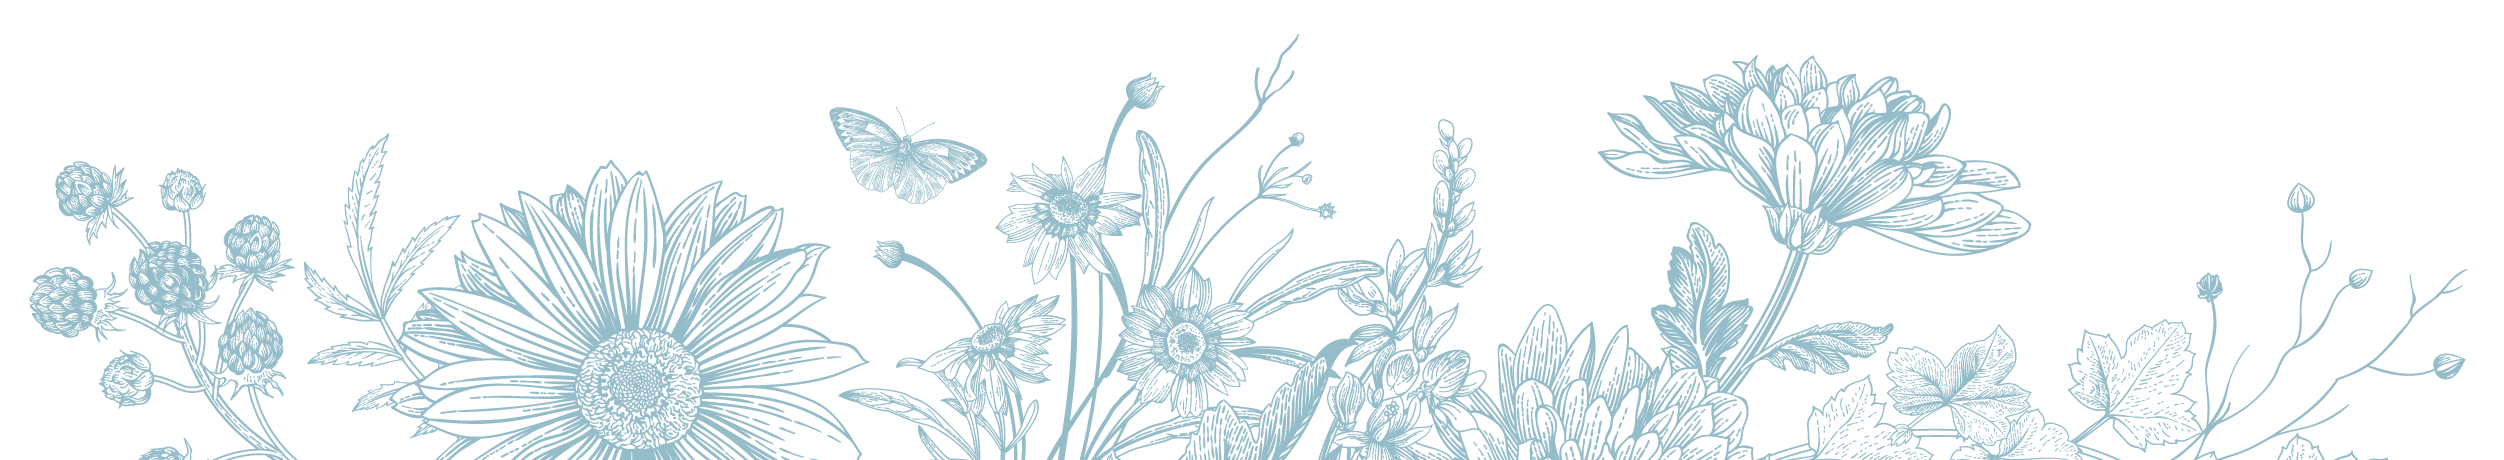 Illustrated floral banner.